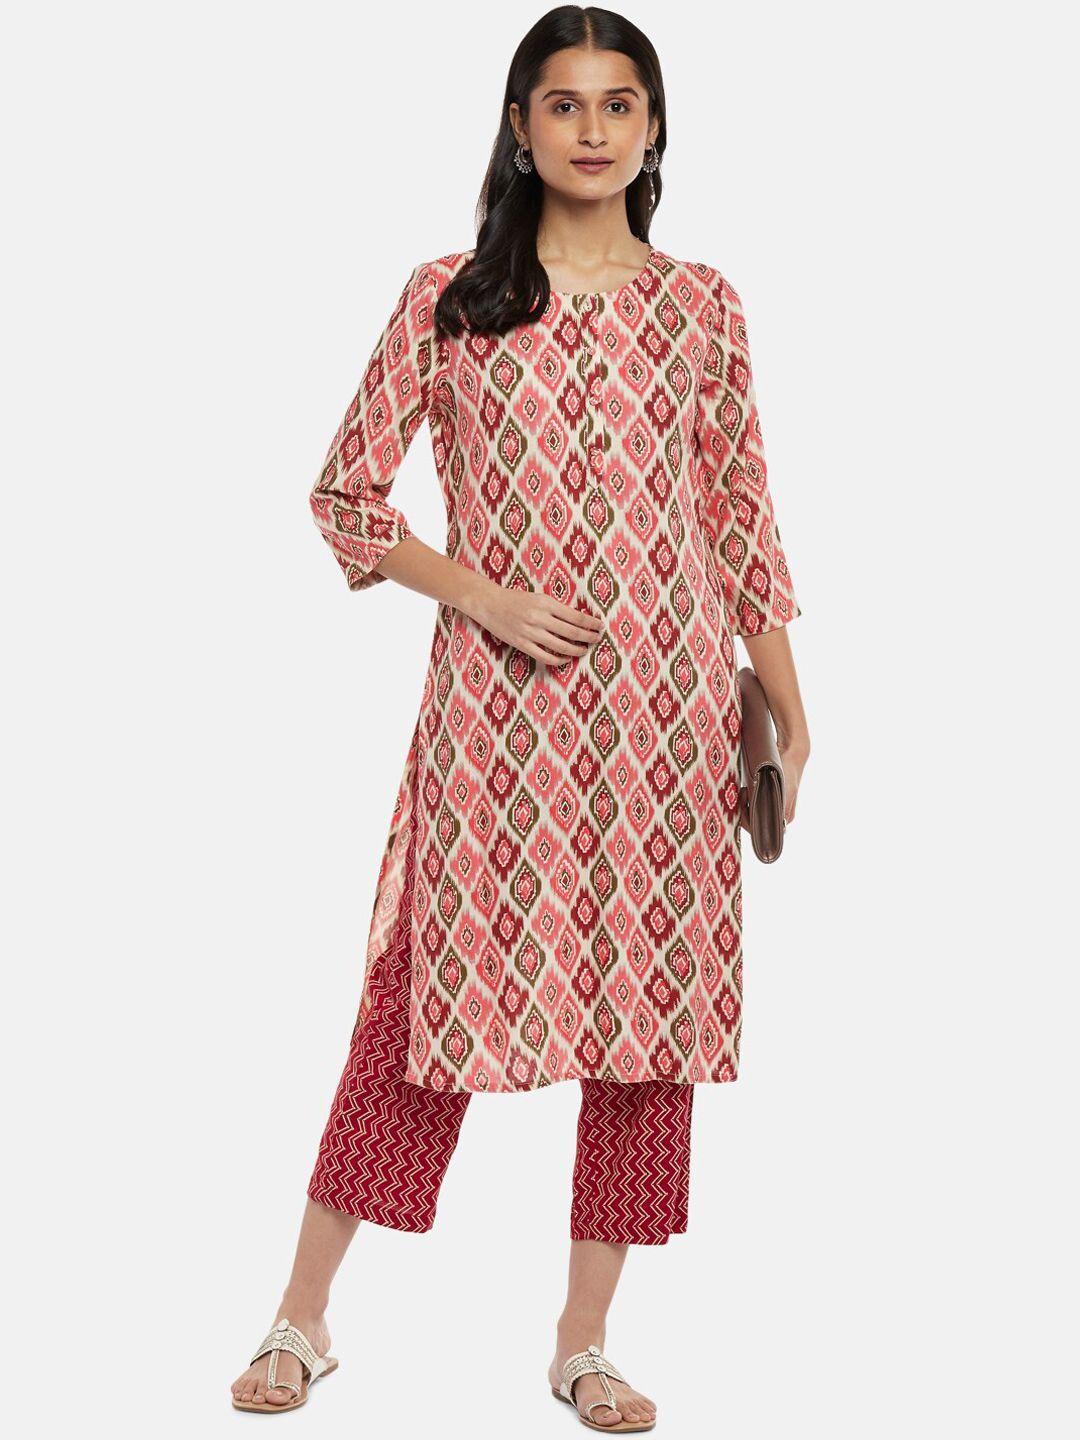 rangmanch by pantaloons women maroon & peach printed kurti with trousers